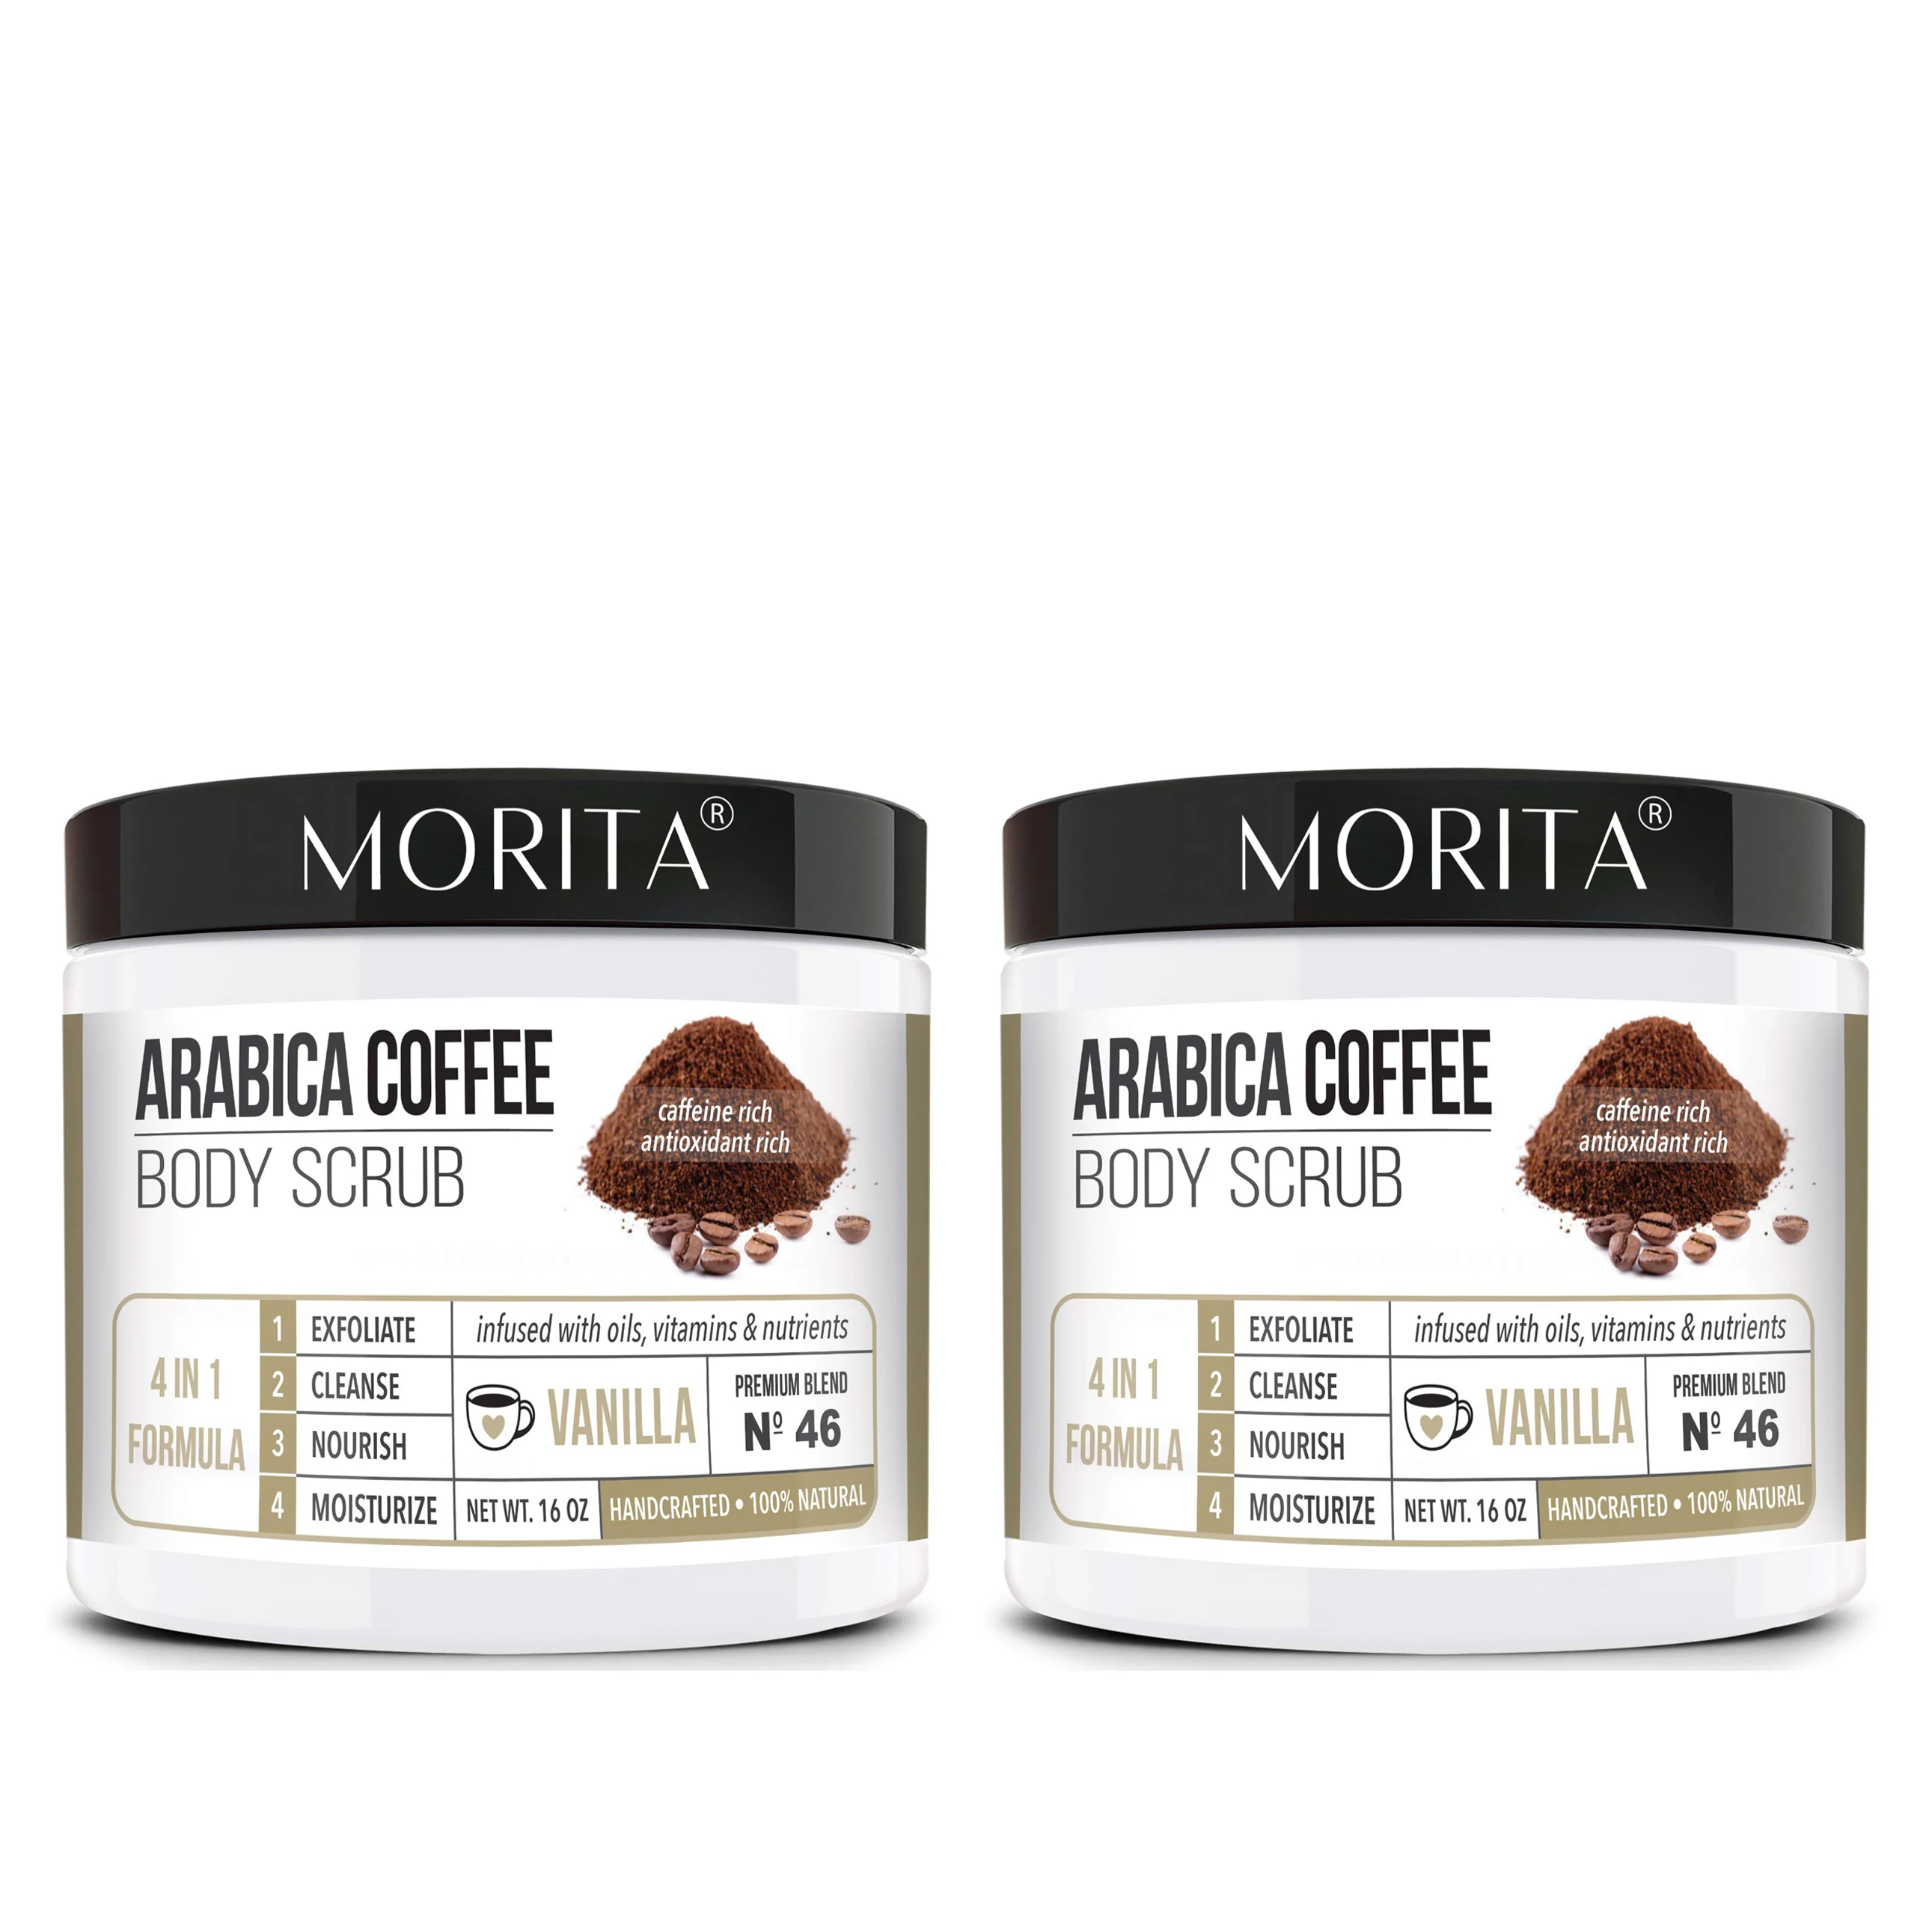 

Processing Customization Exfoliate Cleanse Nourish Moisturize Arabica Coffee Body Scrub Sea Salt Fruit Brightening Scrub